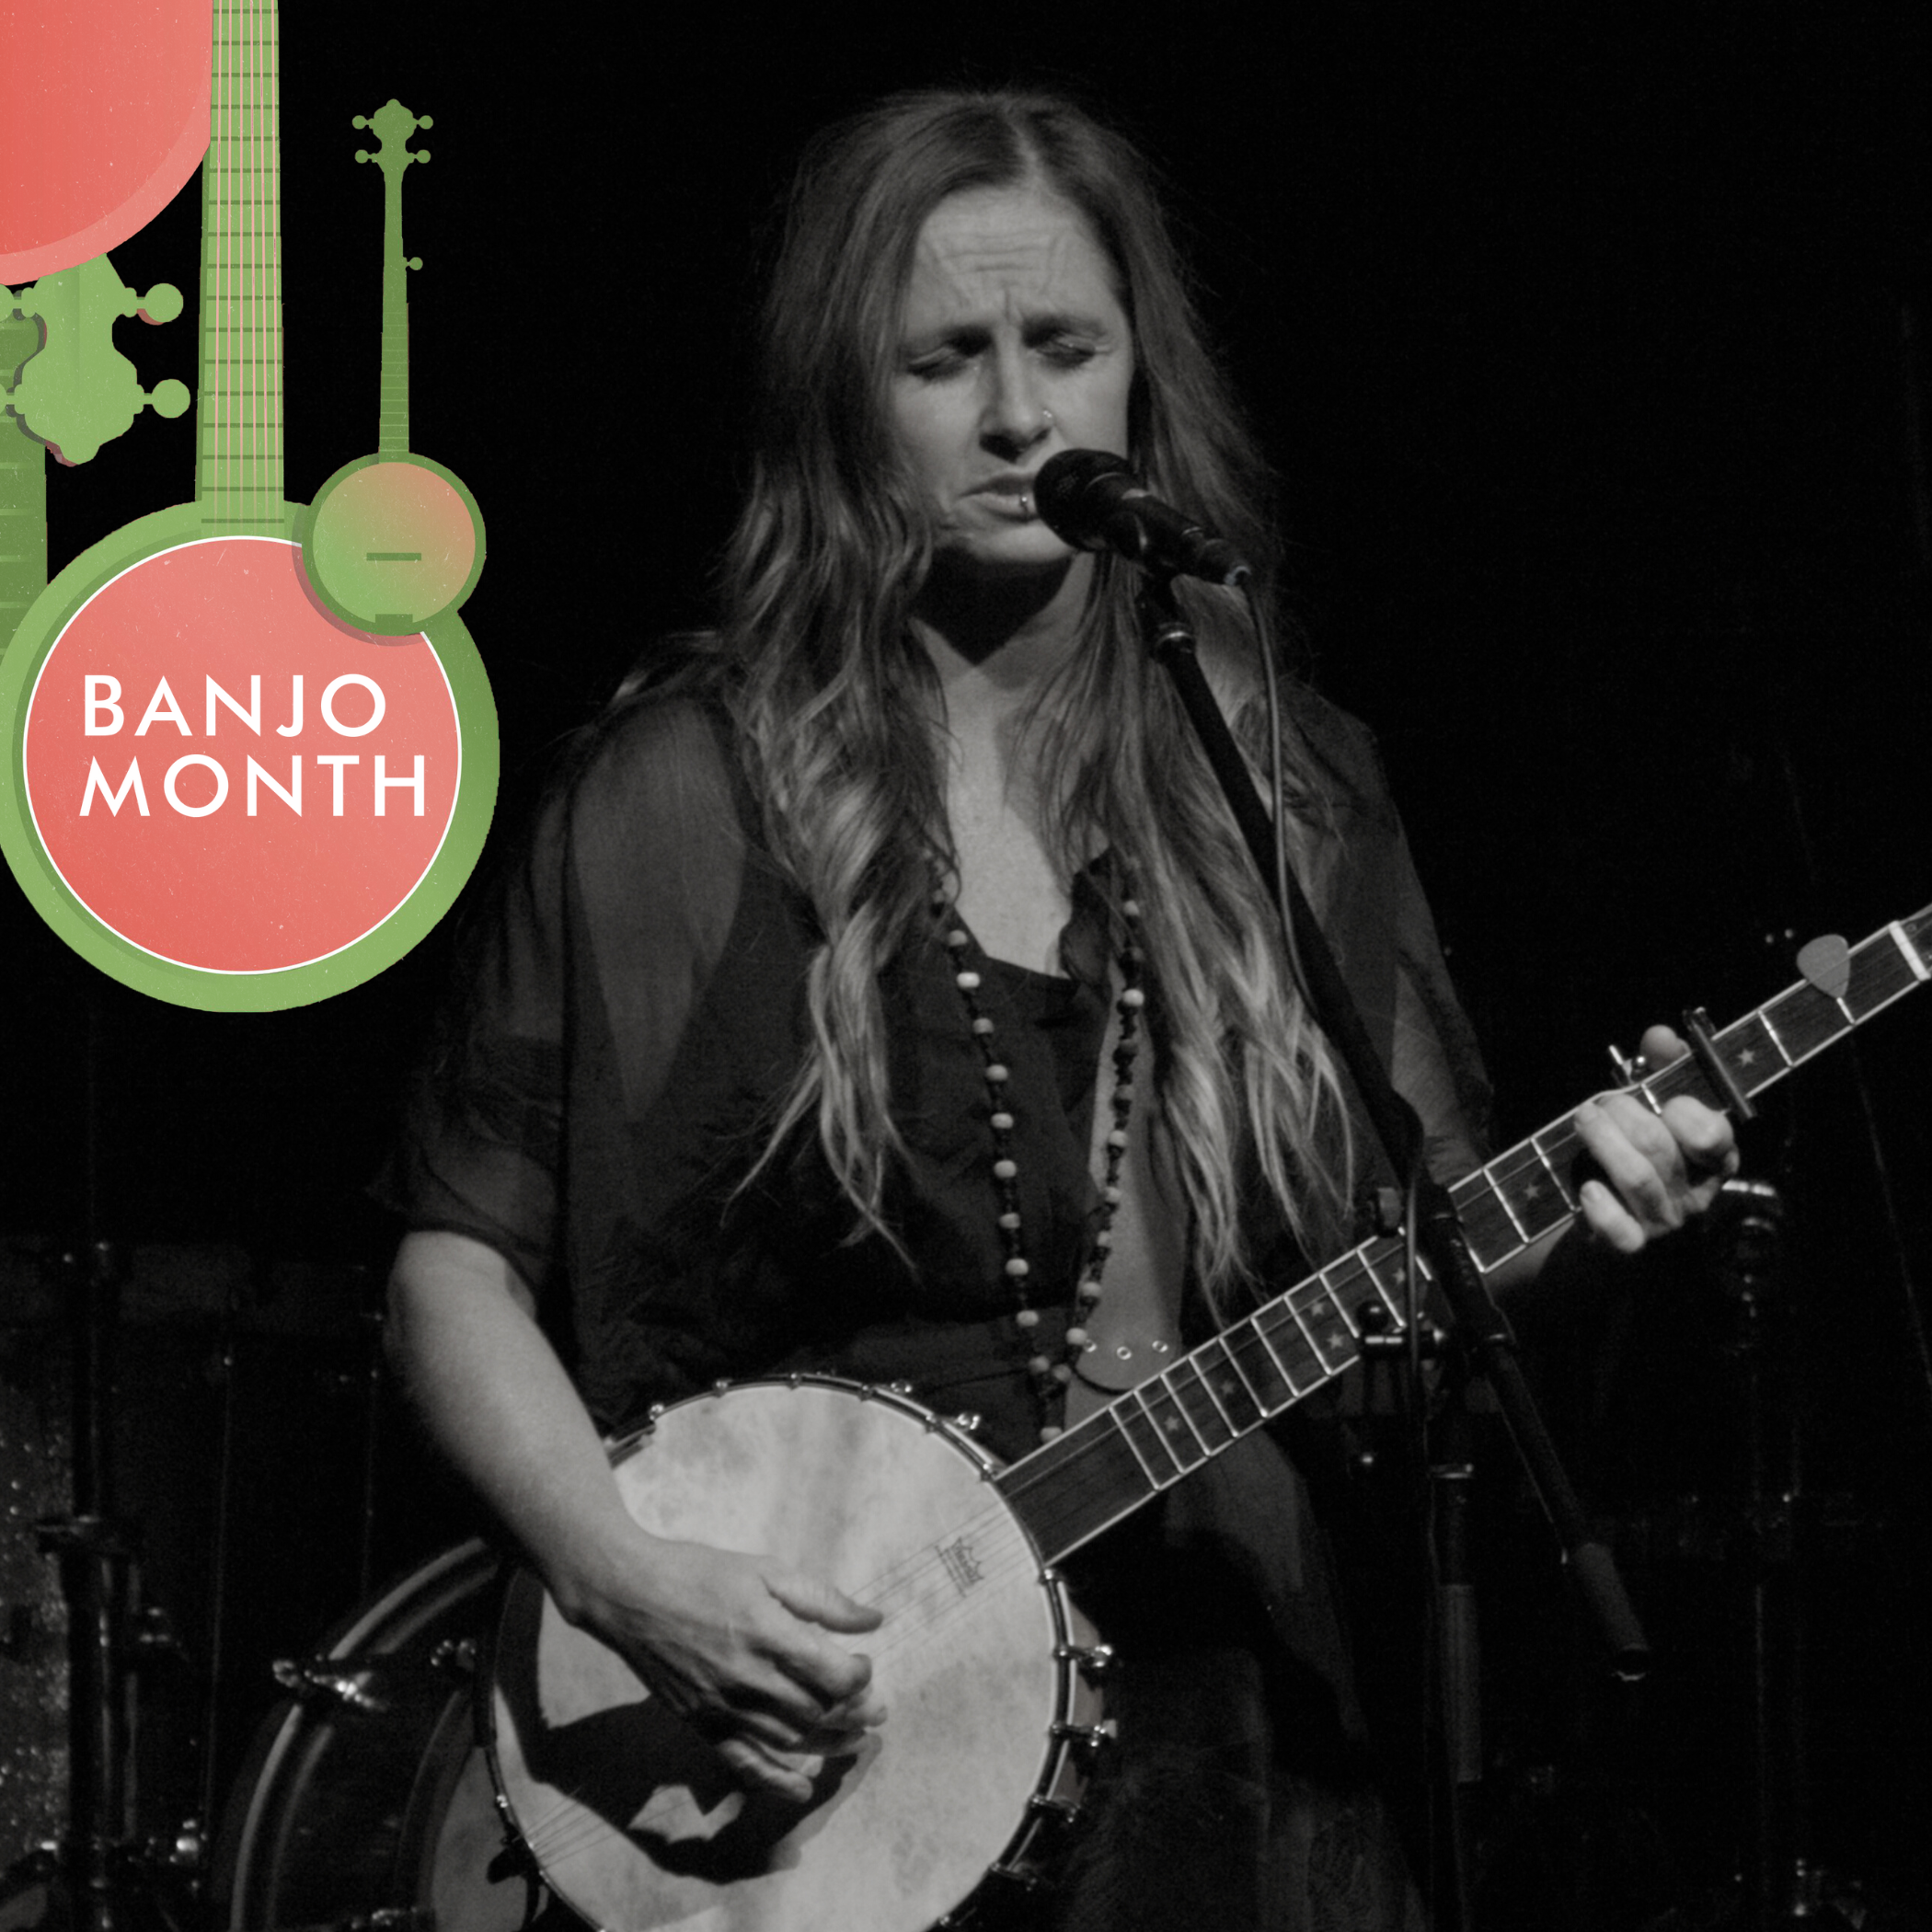 Can Banjo Transcend Cultural Divisions? Bill Evans' New Album Makes the Case